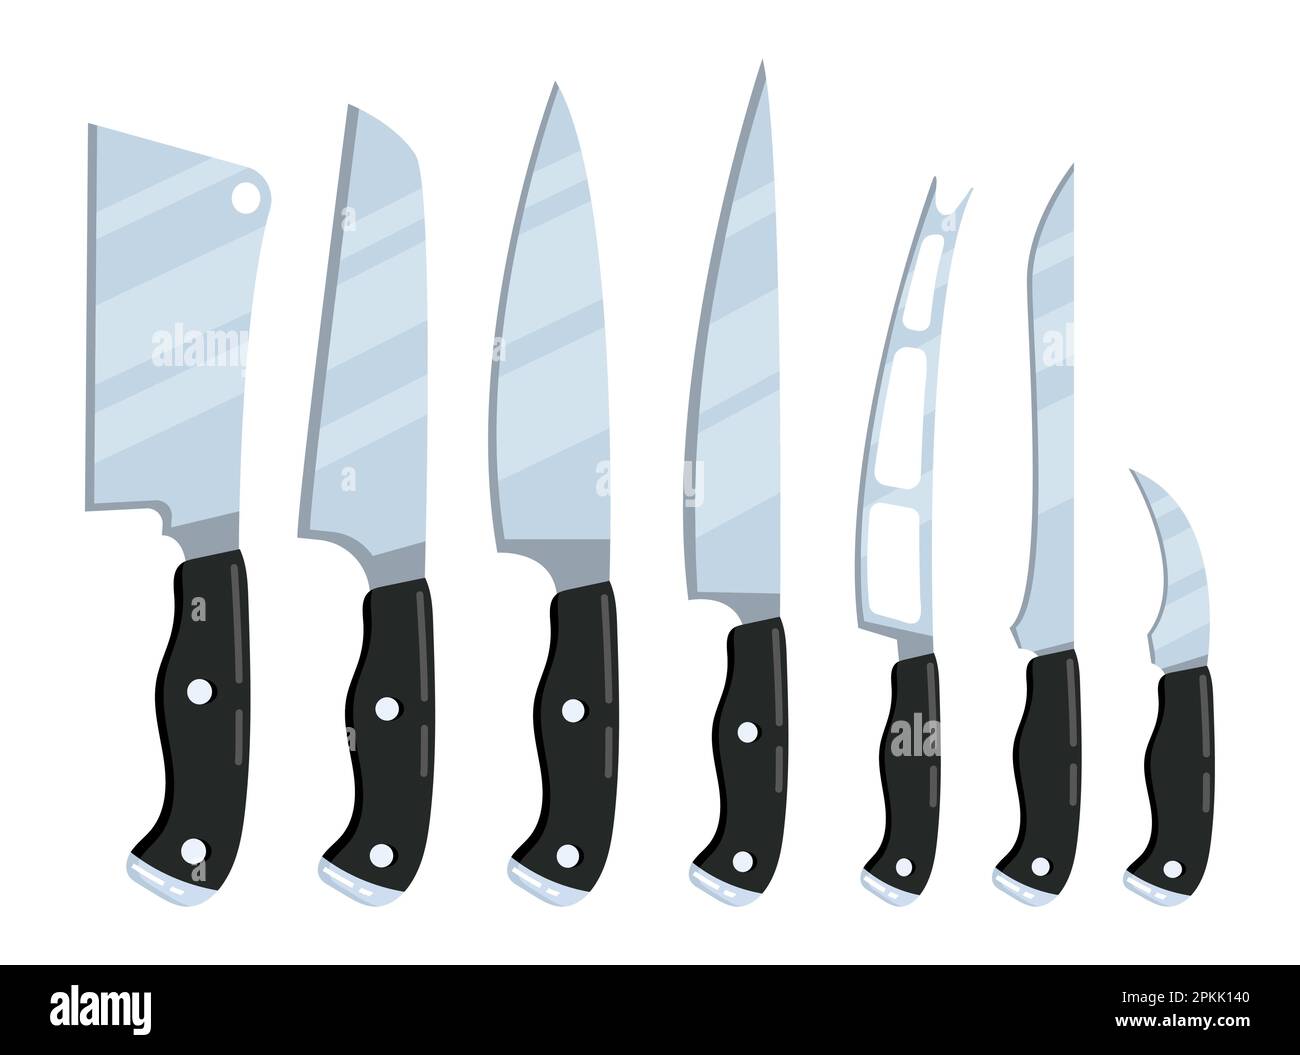 https://c8.alamy.com/comp/2PKK140/kitchen-knives-set-vector-professional-kitchen-knives-for-cutting-meat-vegetables-kitchenware-for-cutting-blade-cook-for-restaurants-cafes-stai-2PKK140.jpg